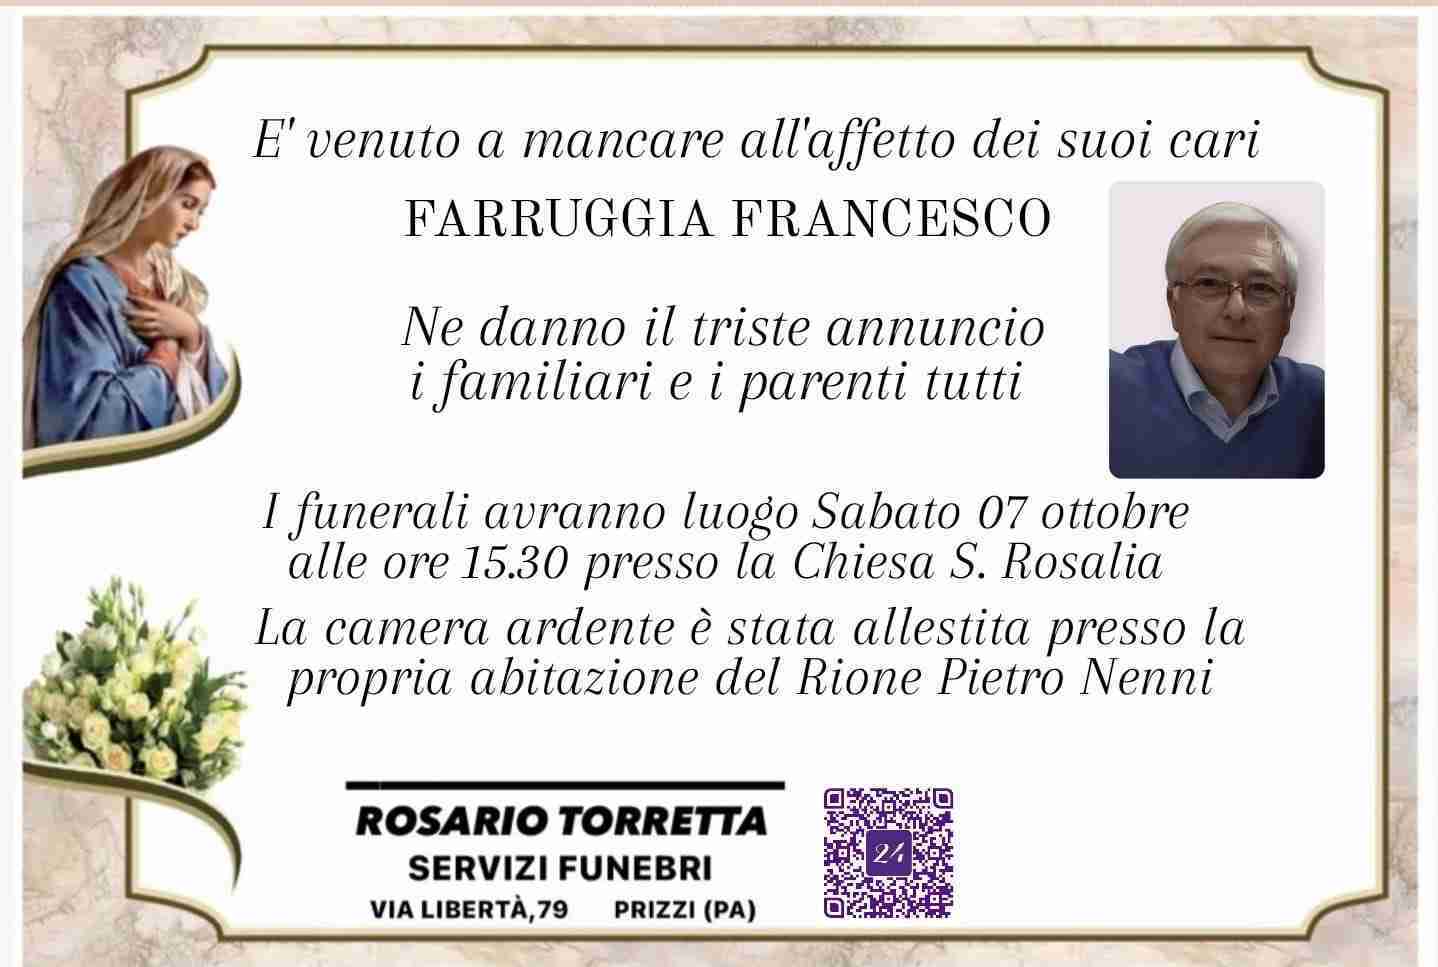 Francesco Farruggia